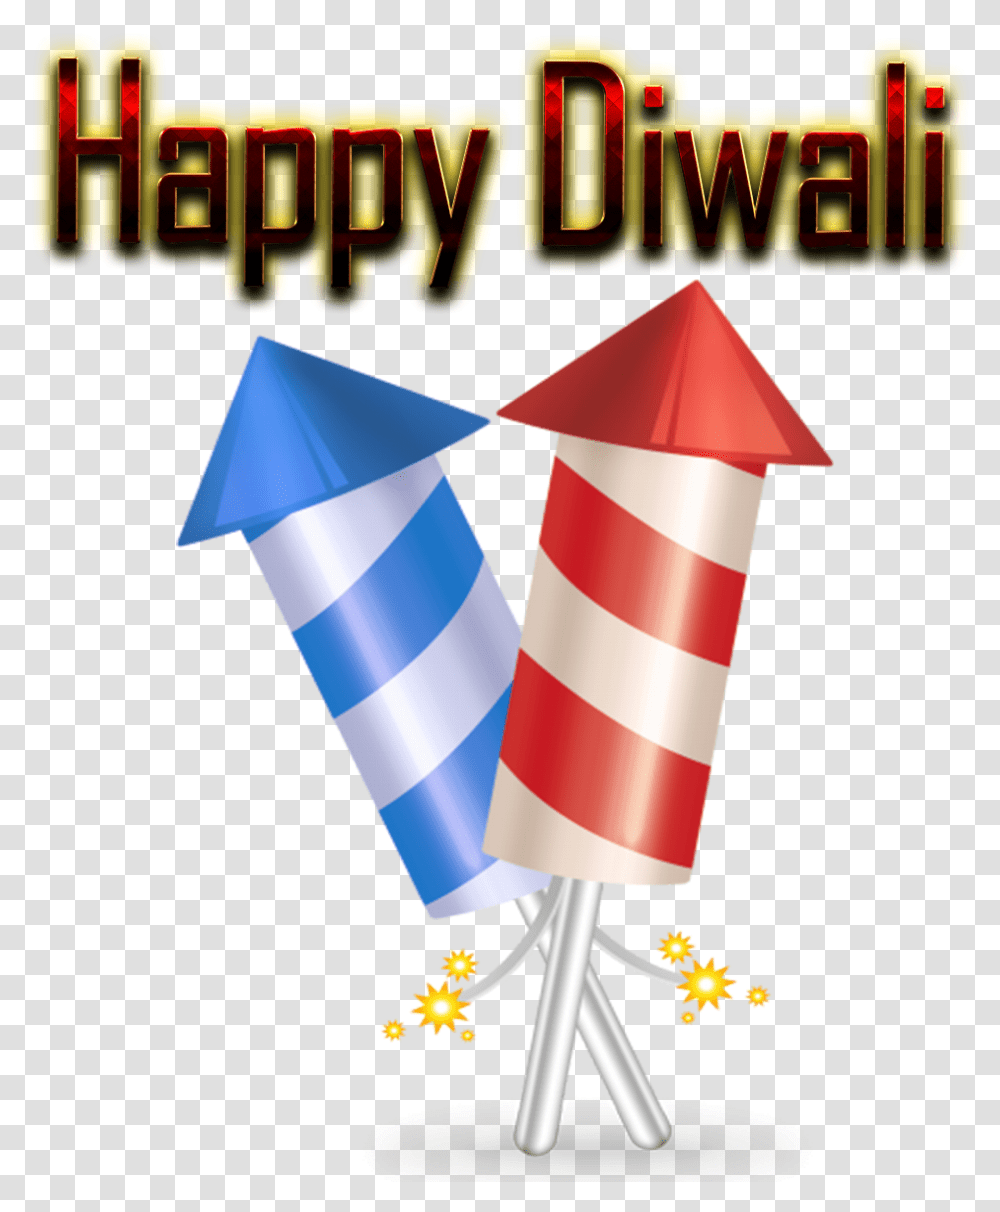 Happy Diwali 2018 Free Download Happy Diwali 2018, Paper, Party Hat Transparent Png